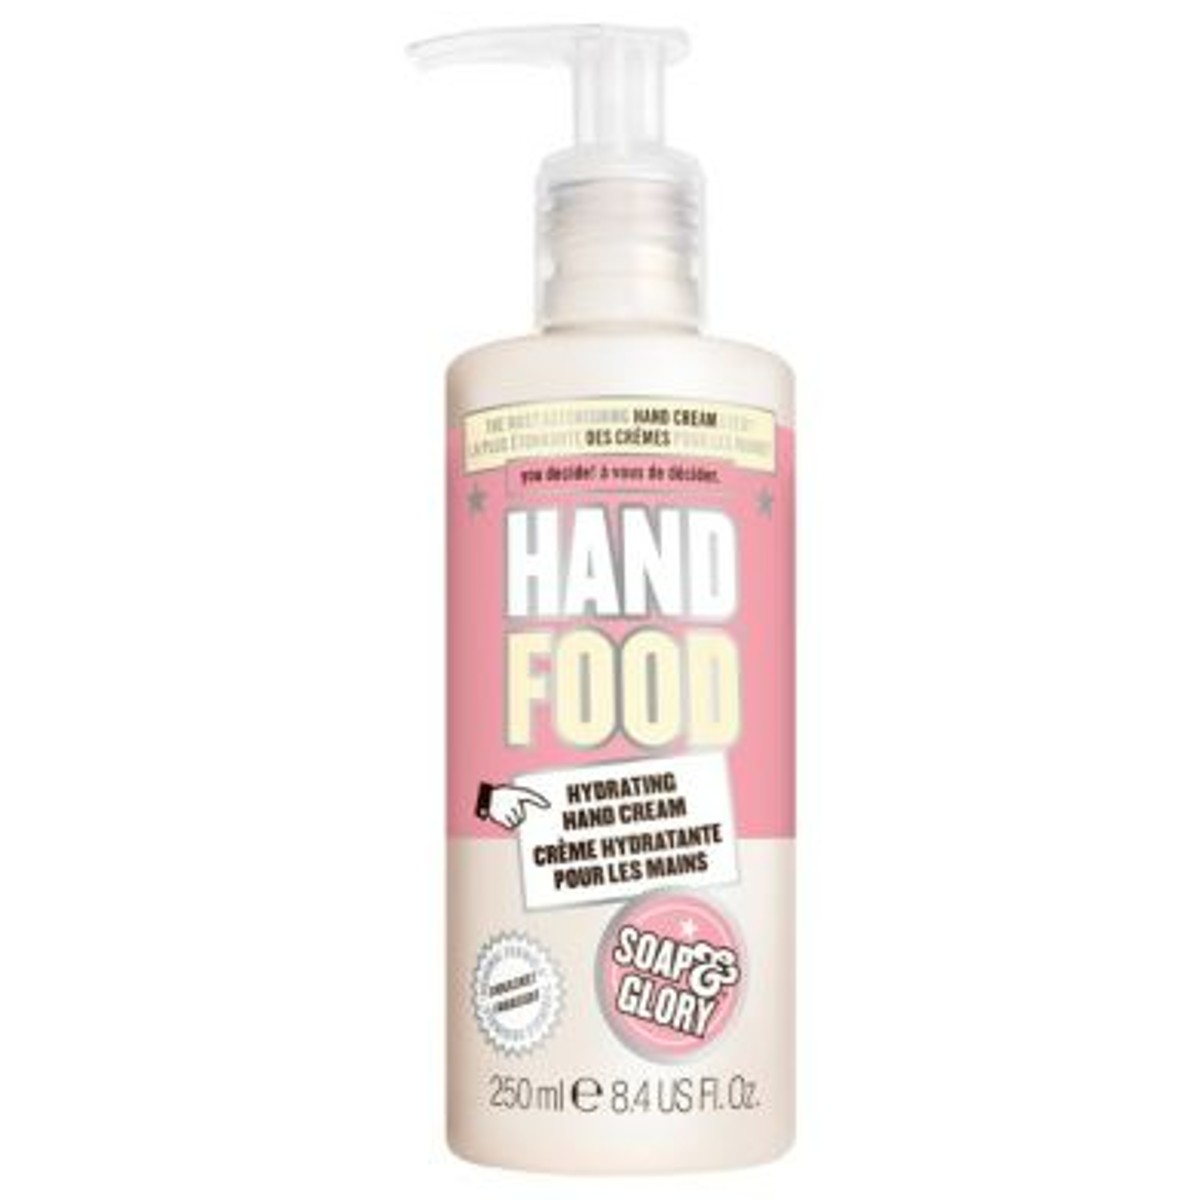 Hand Food Hydrating Hand Cream Pump